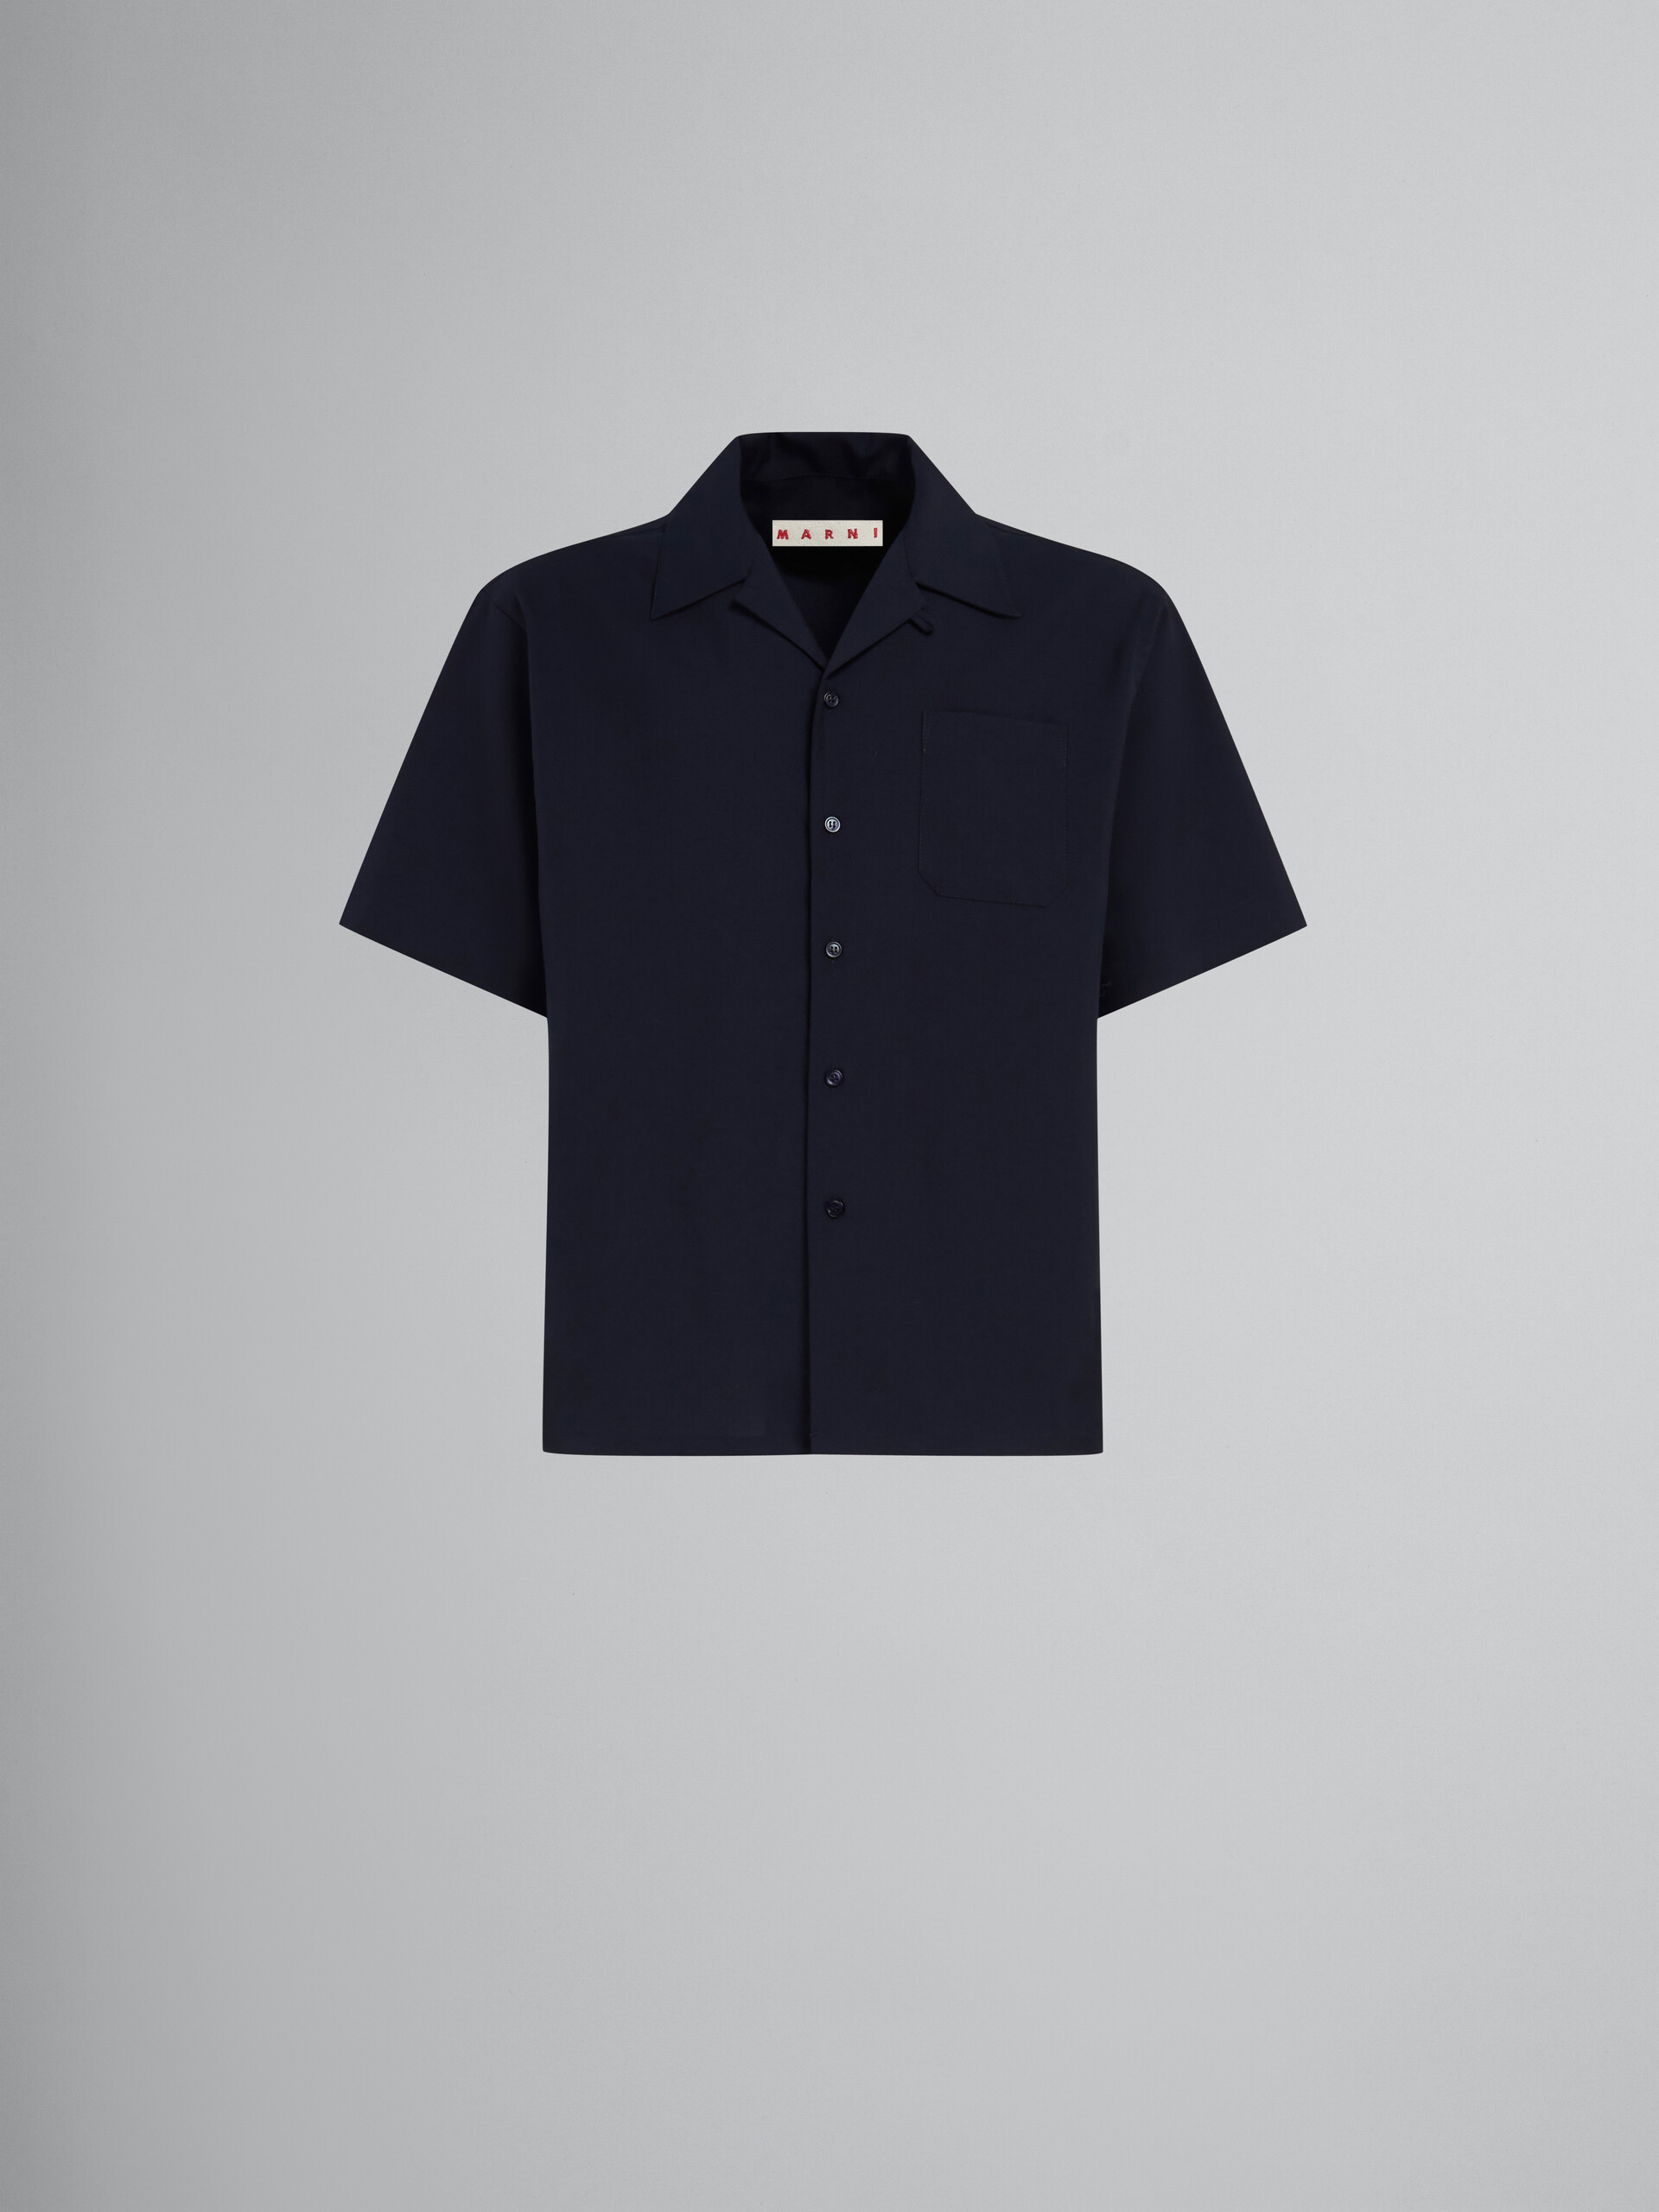 Dunkelblaues Bowlinghemd aus Tropenwolle - Hemden - Image 1